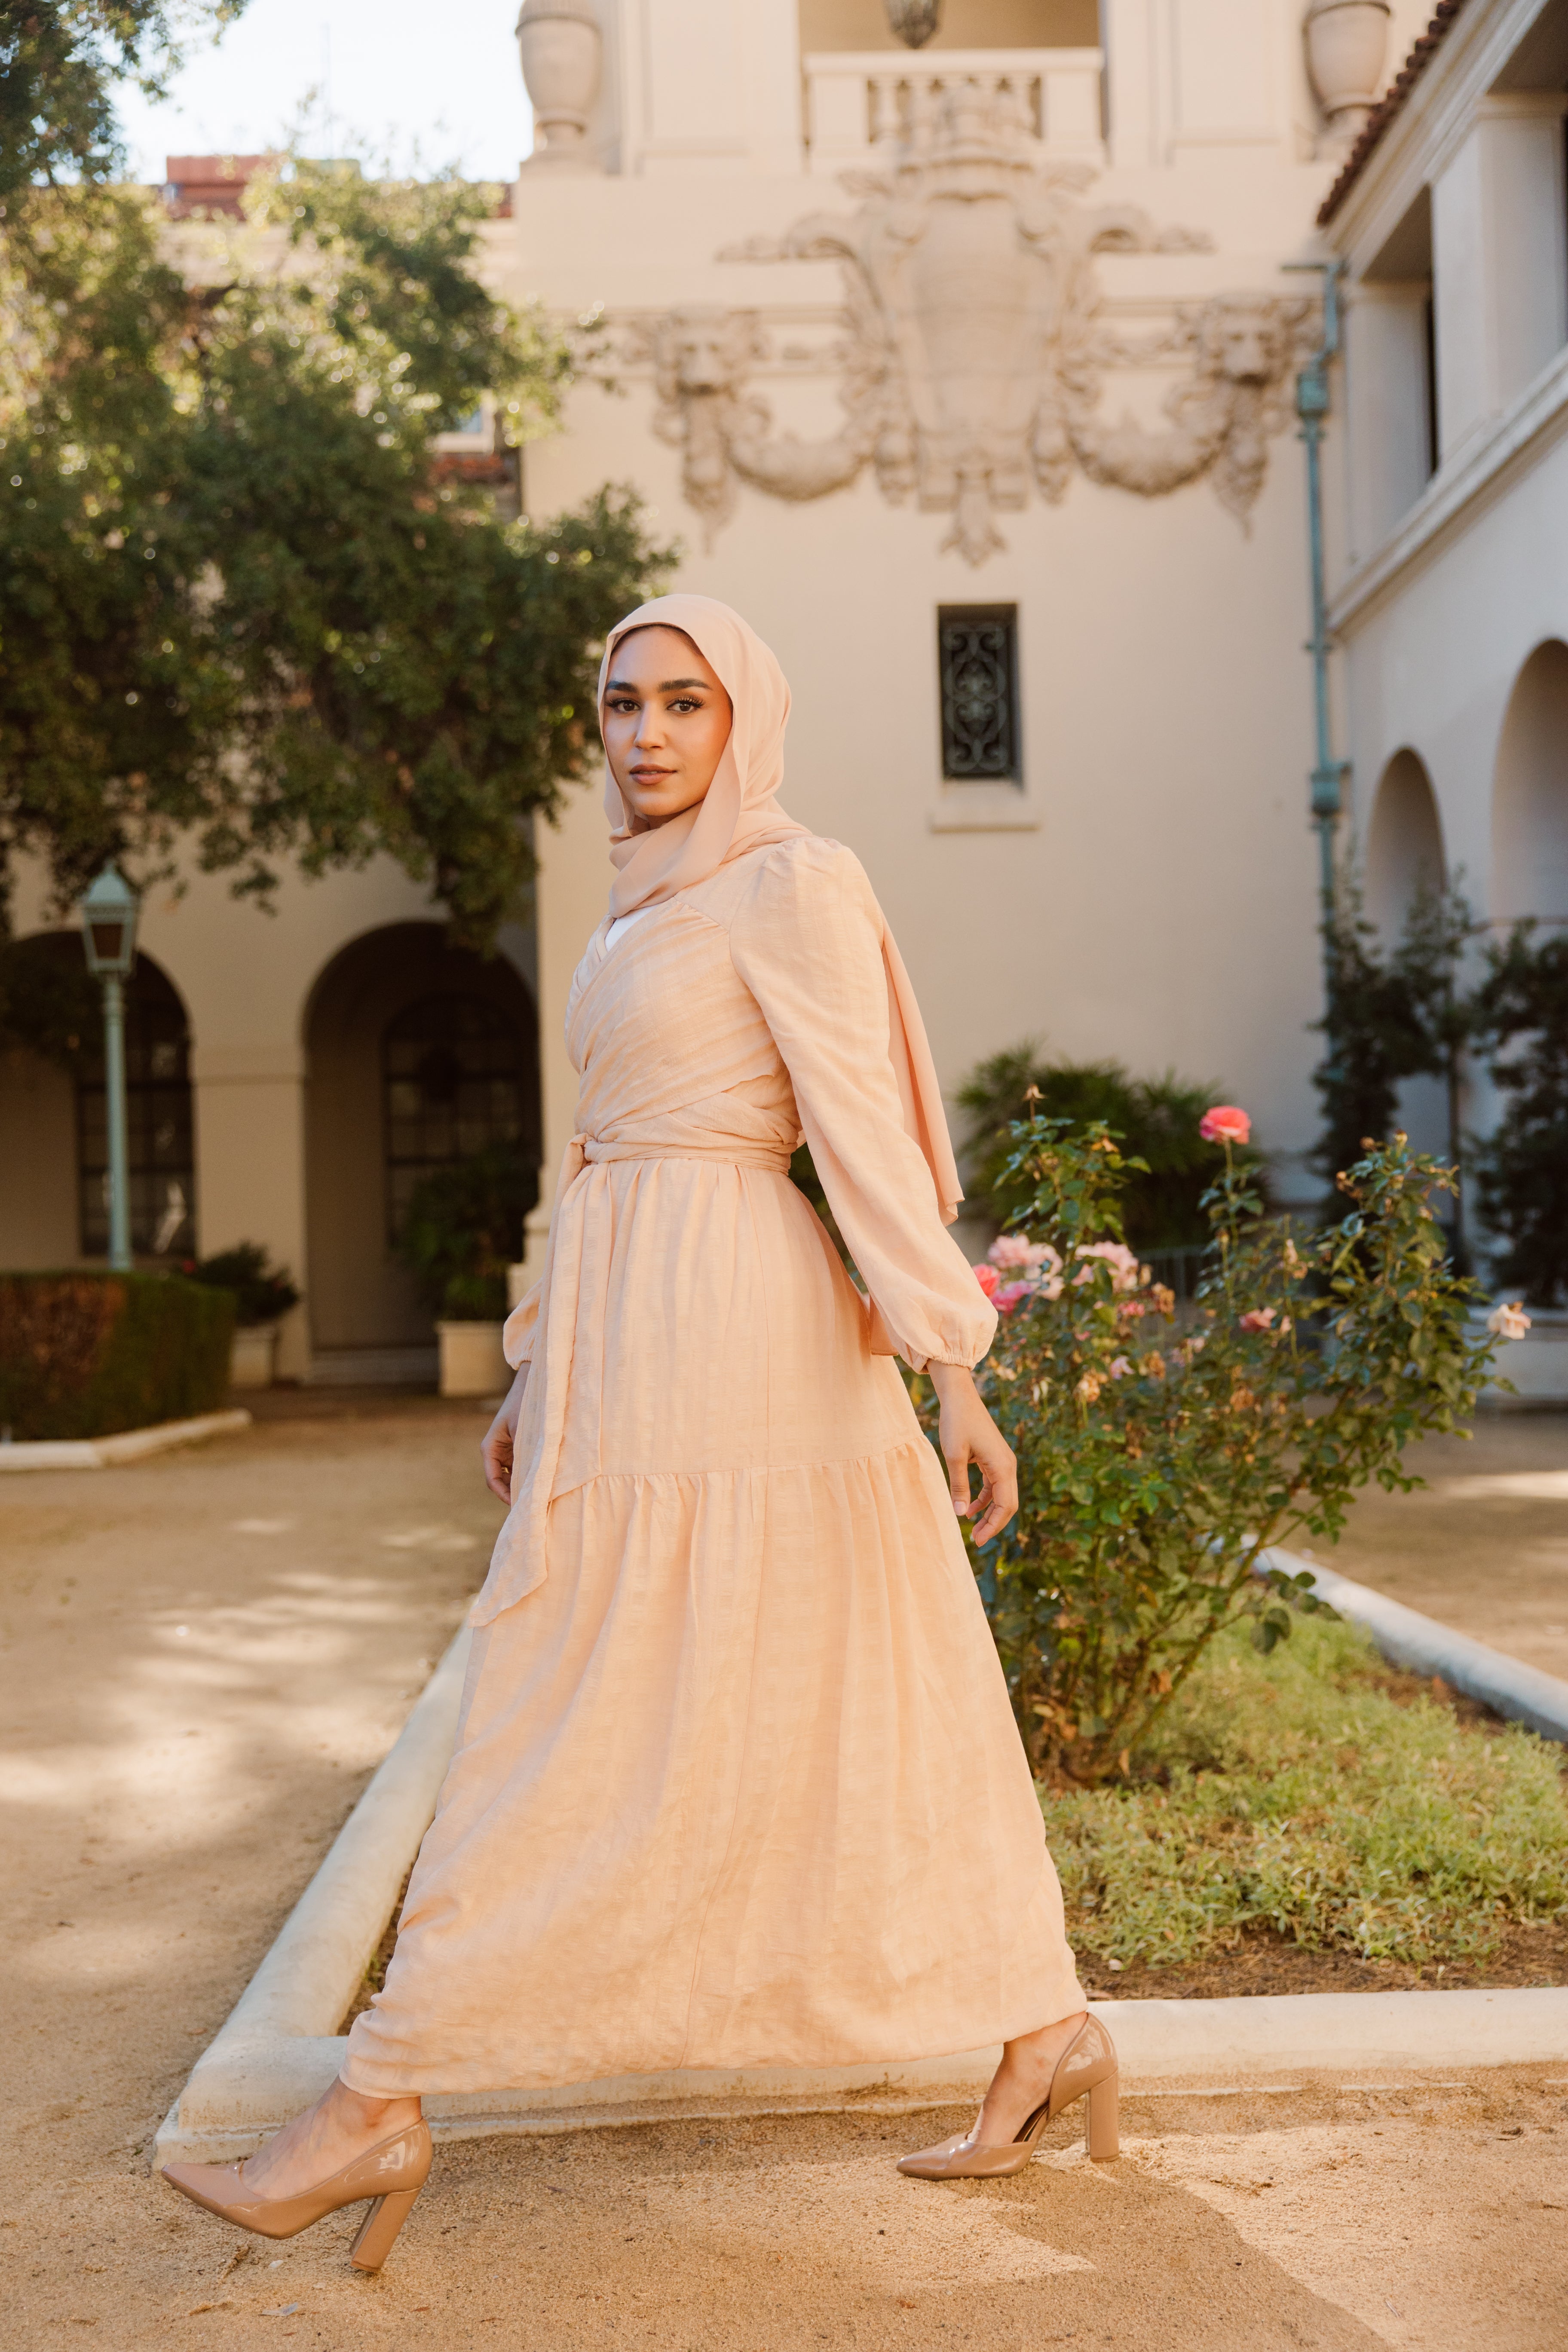 Lace Muslim Wedding Dress Long Sleeve Saudi Arabic Bridal Gown Long Hijab  Veil Z9010 - China Wedding Dress and Bridal Dress price | Made-in-China.com